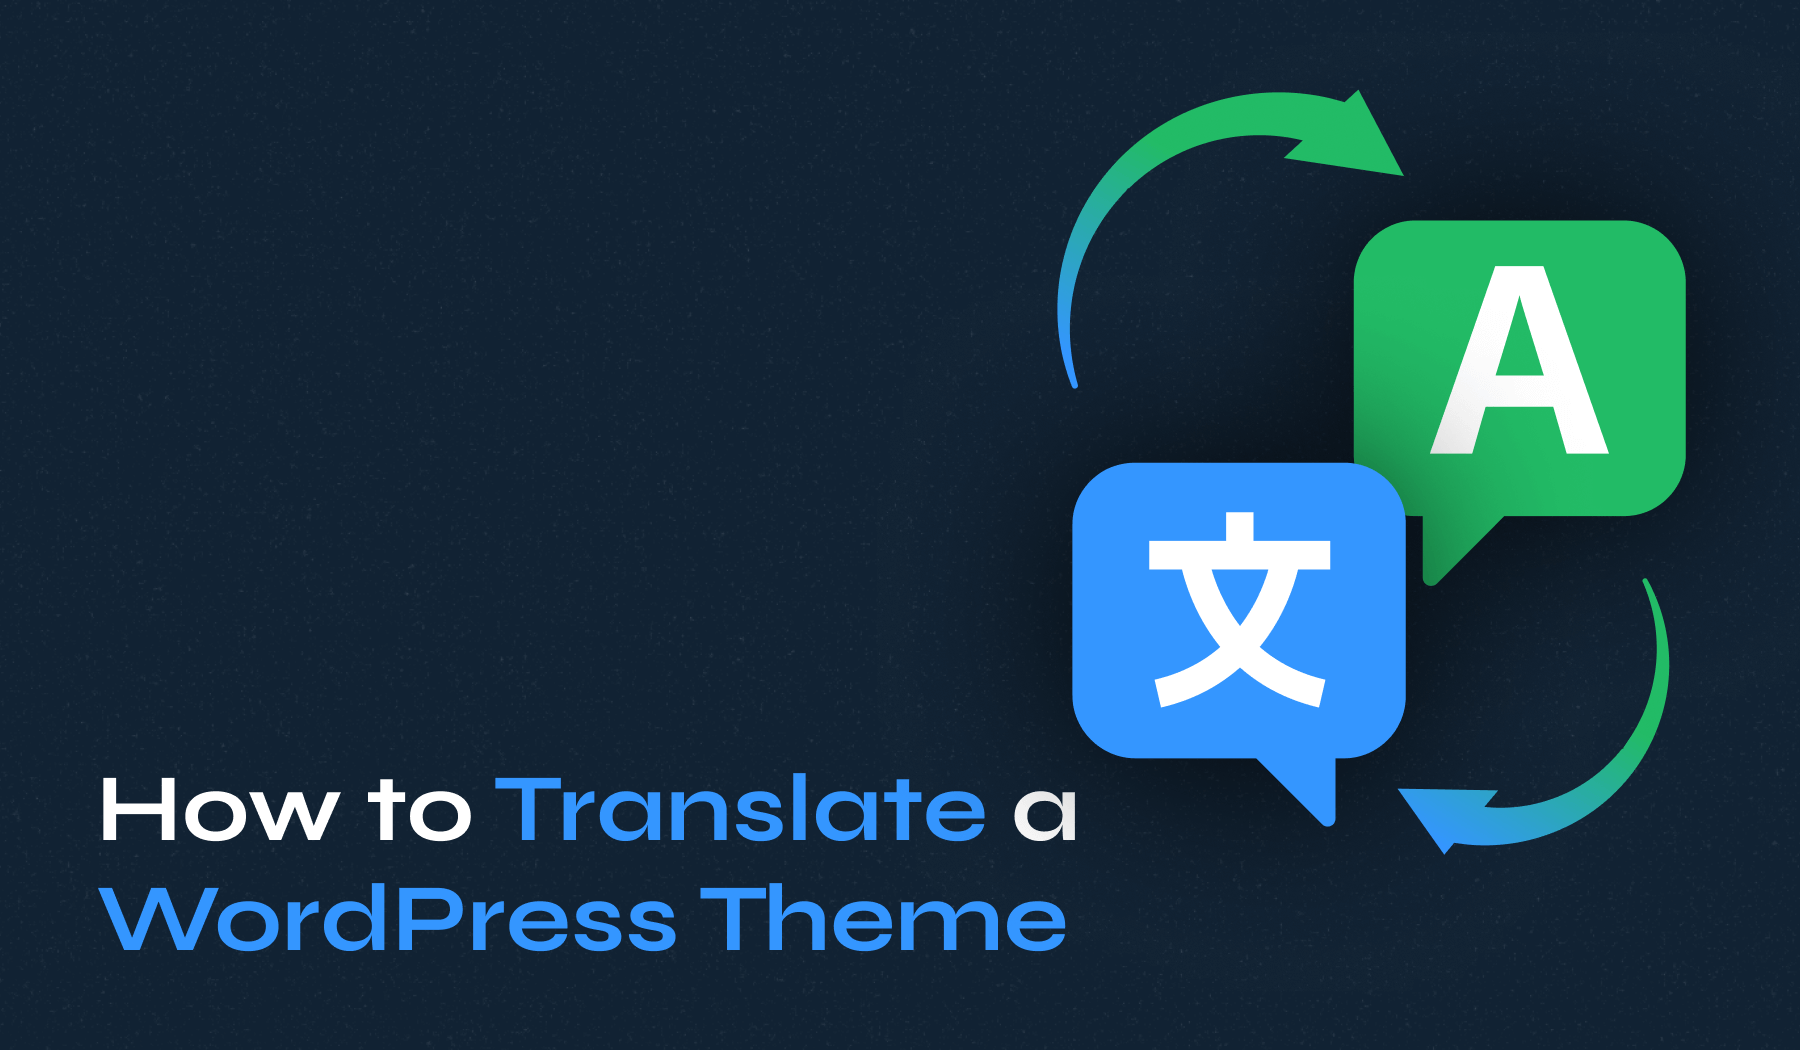 How to Translate a WordPress Theme